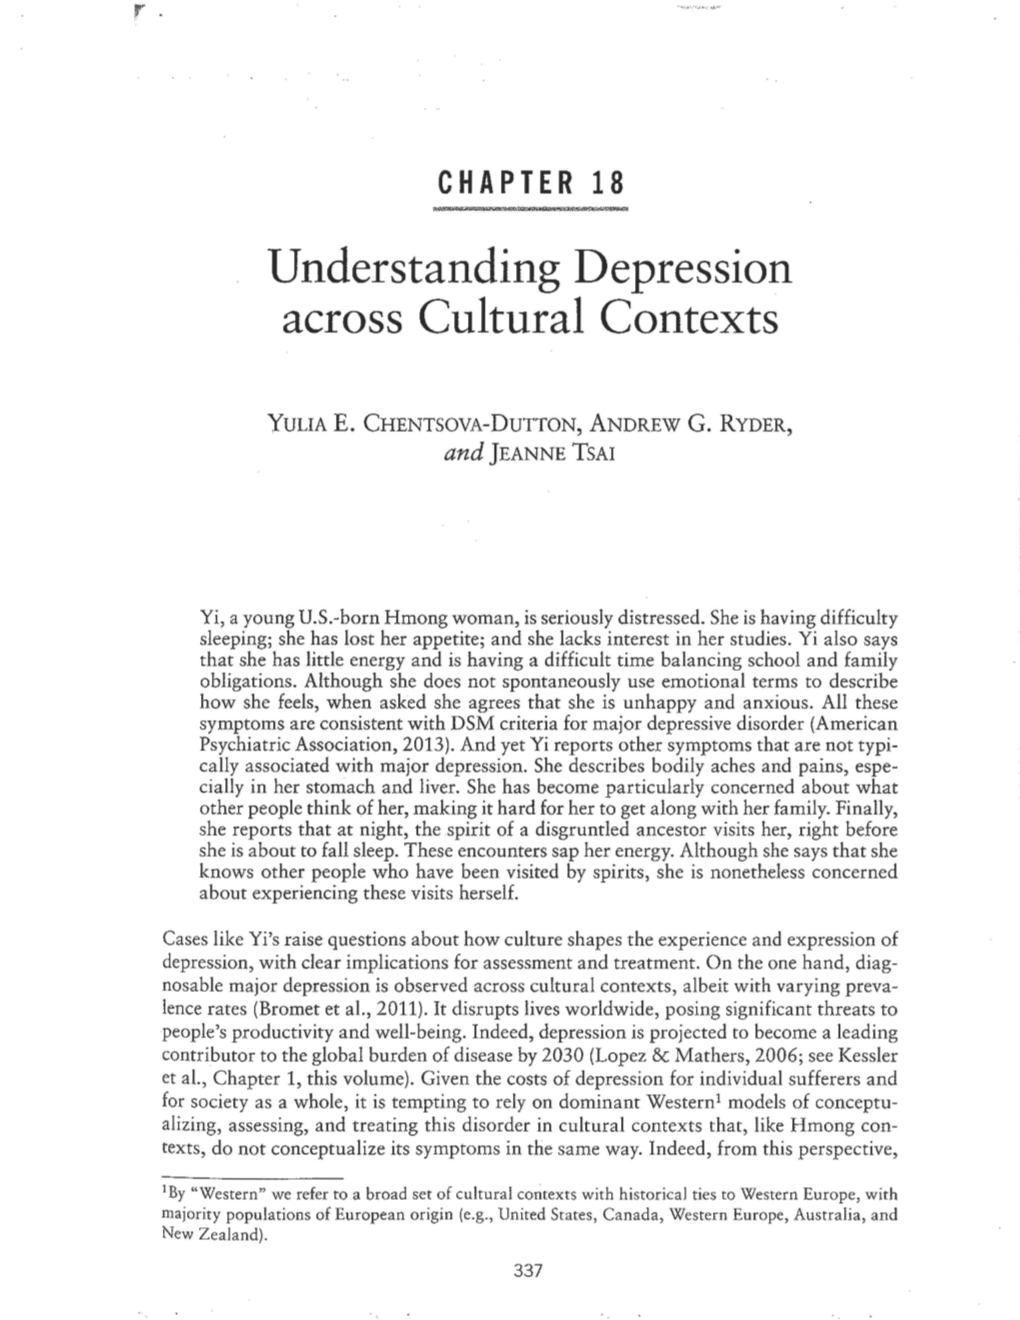 Understanding Depression Across Cultural Contexts